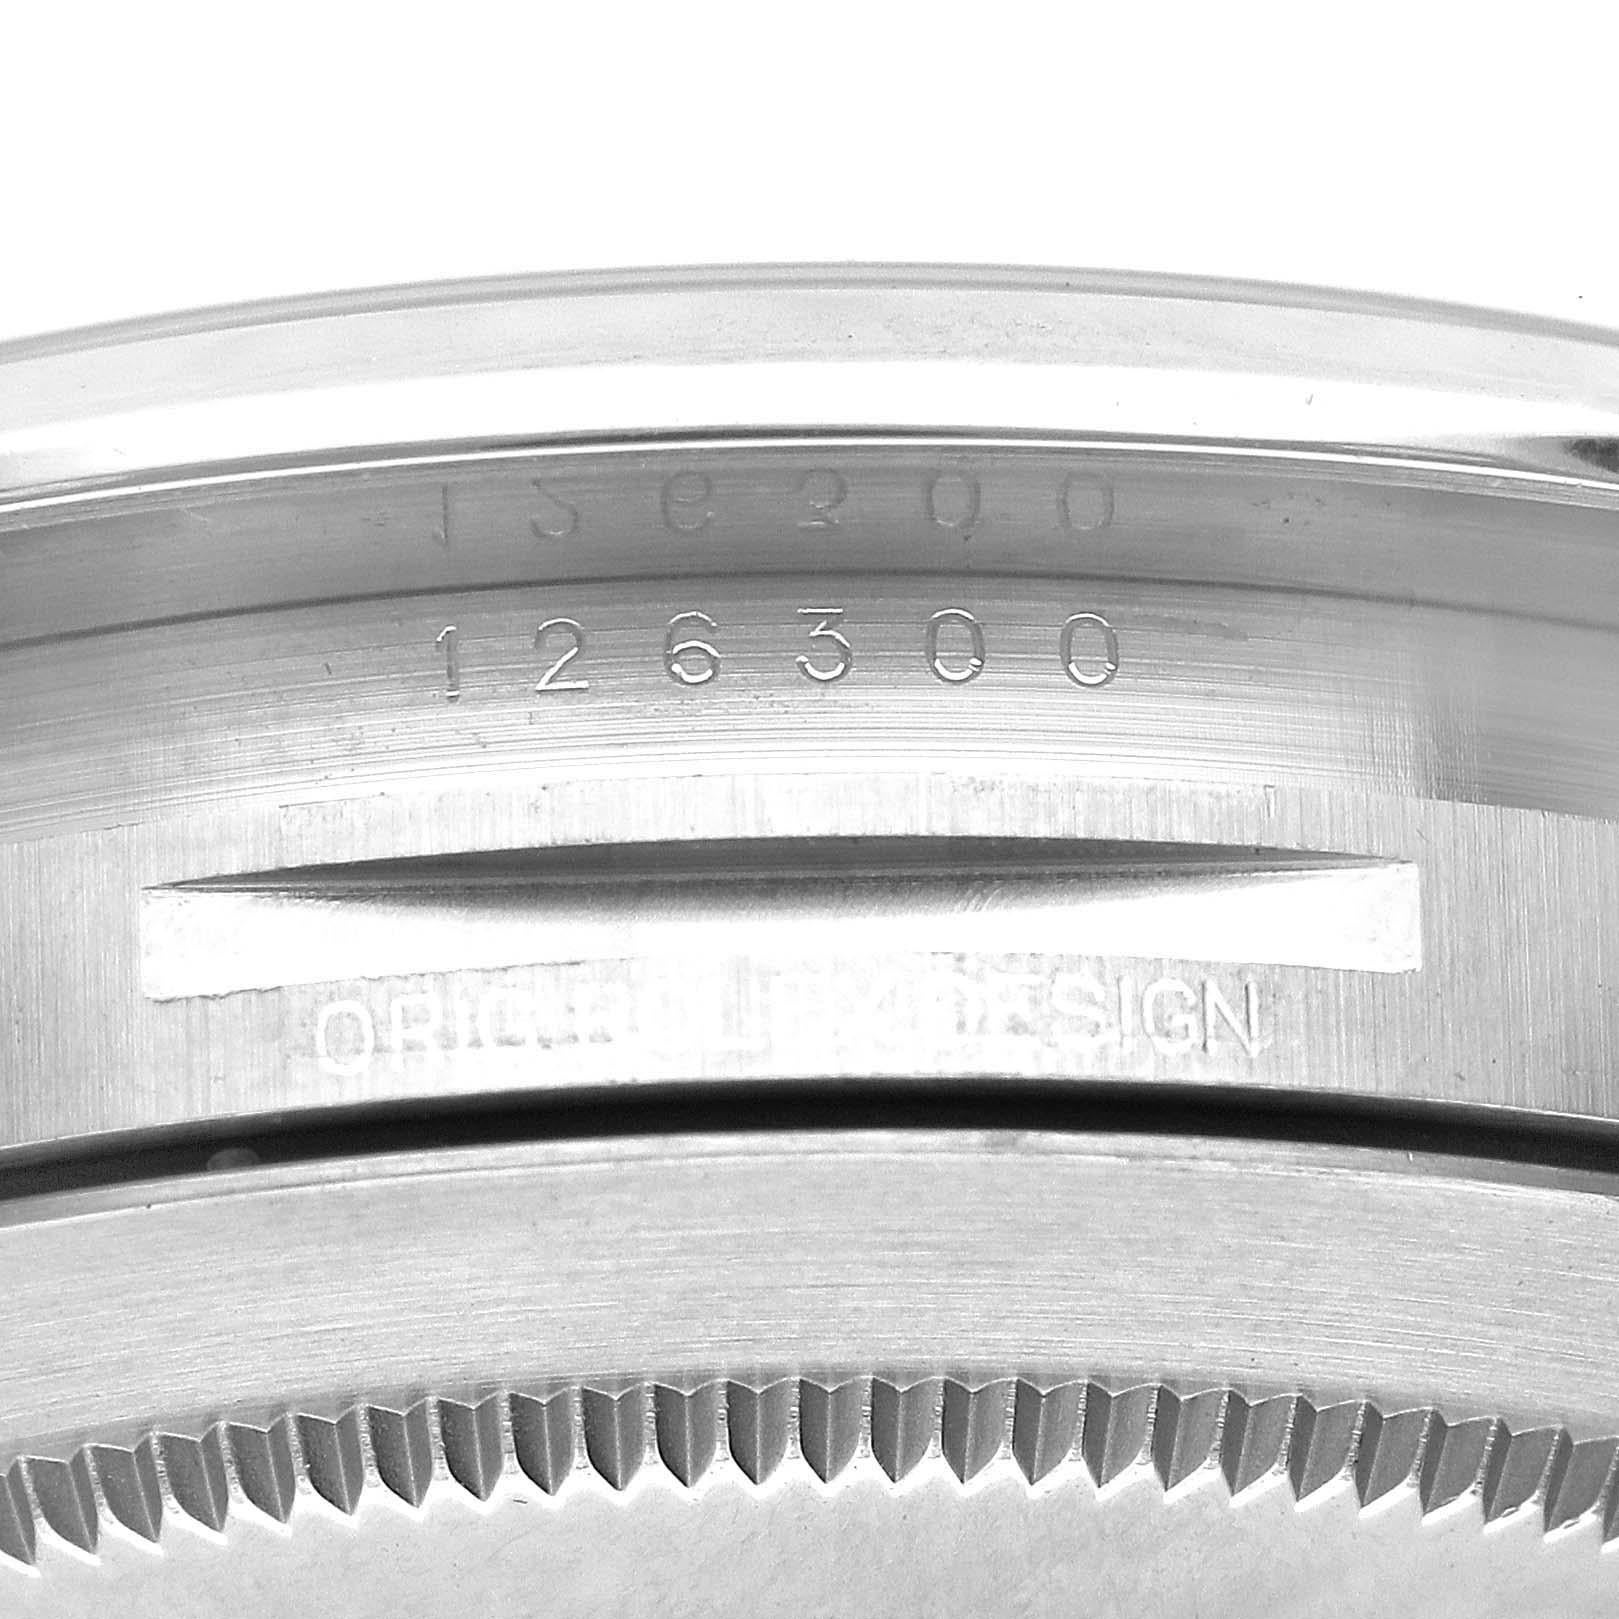 Men's Rolex Datejust 41 Blue Dial Smooth Bezel Steel Mens Watch 126300 For Sale